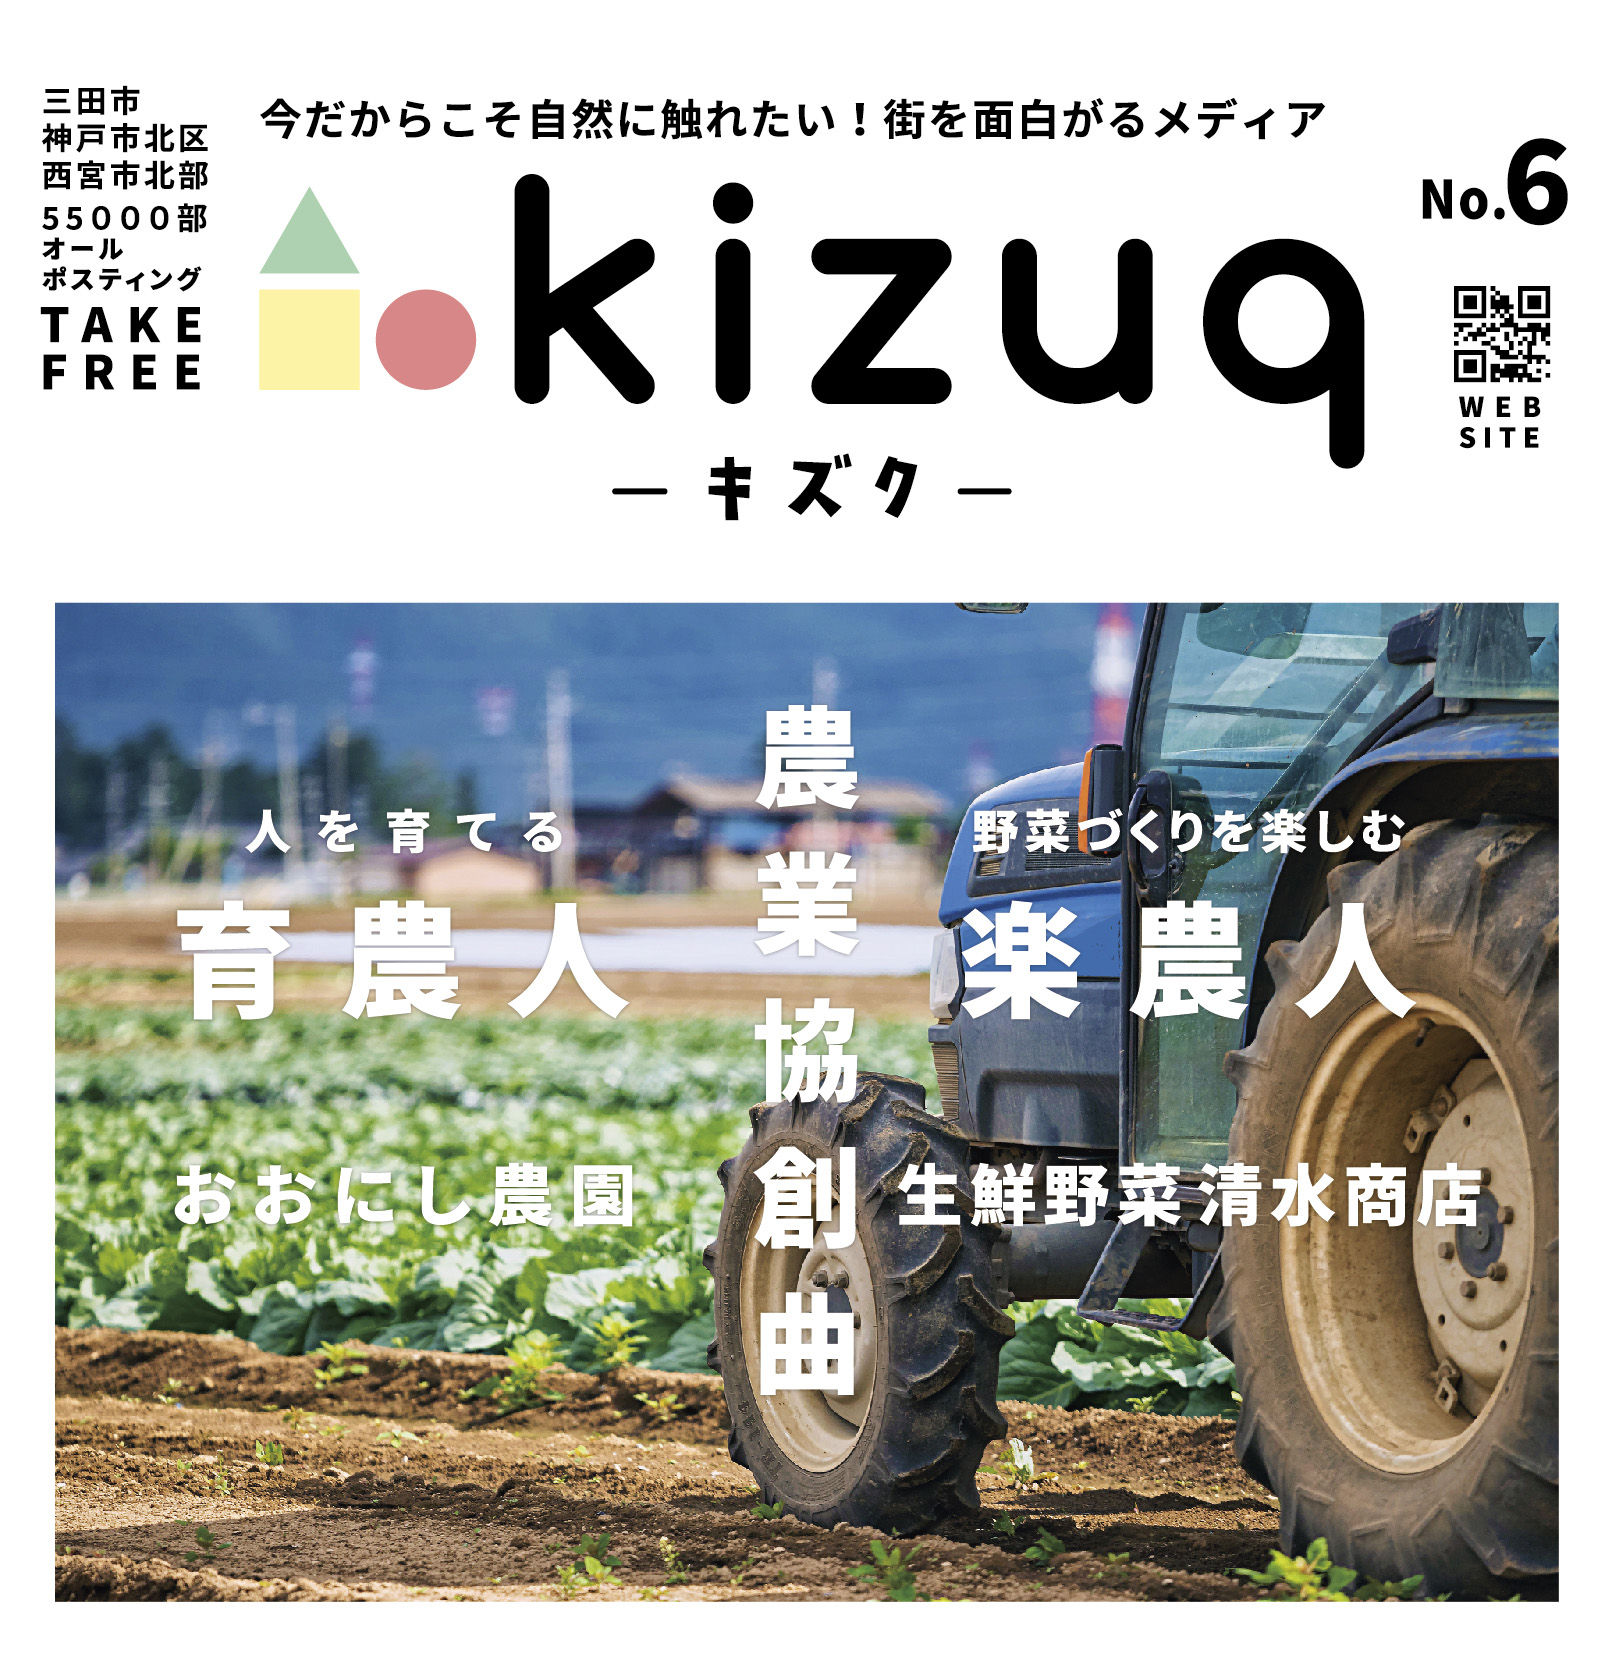 Kizuq ｷｽﾞｸ 神戸市北区 三田市の地域メディア